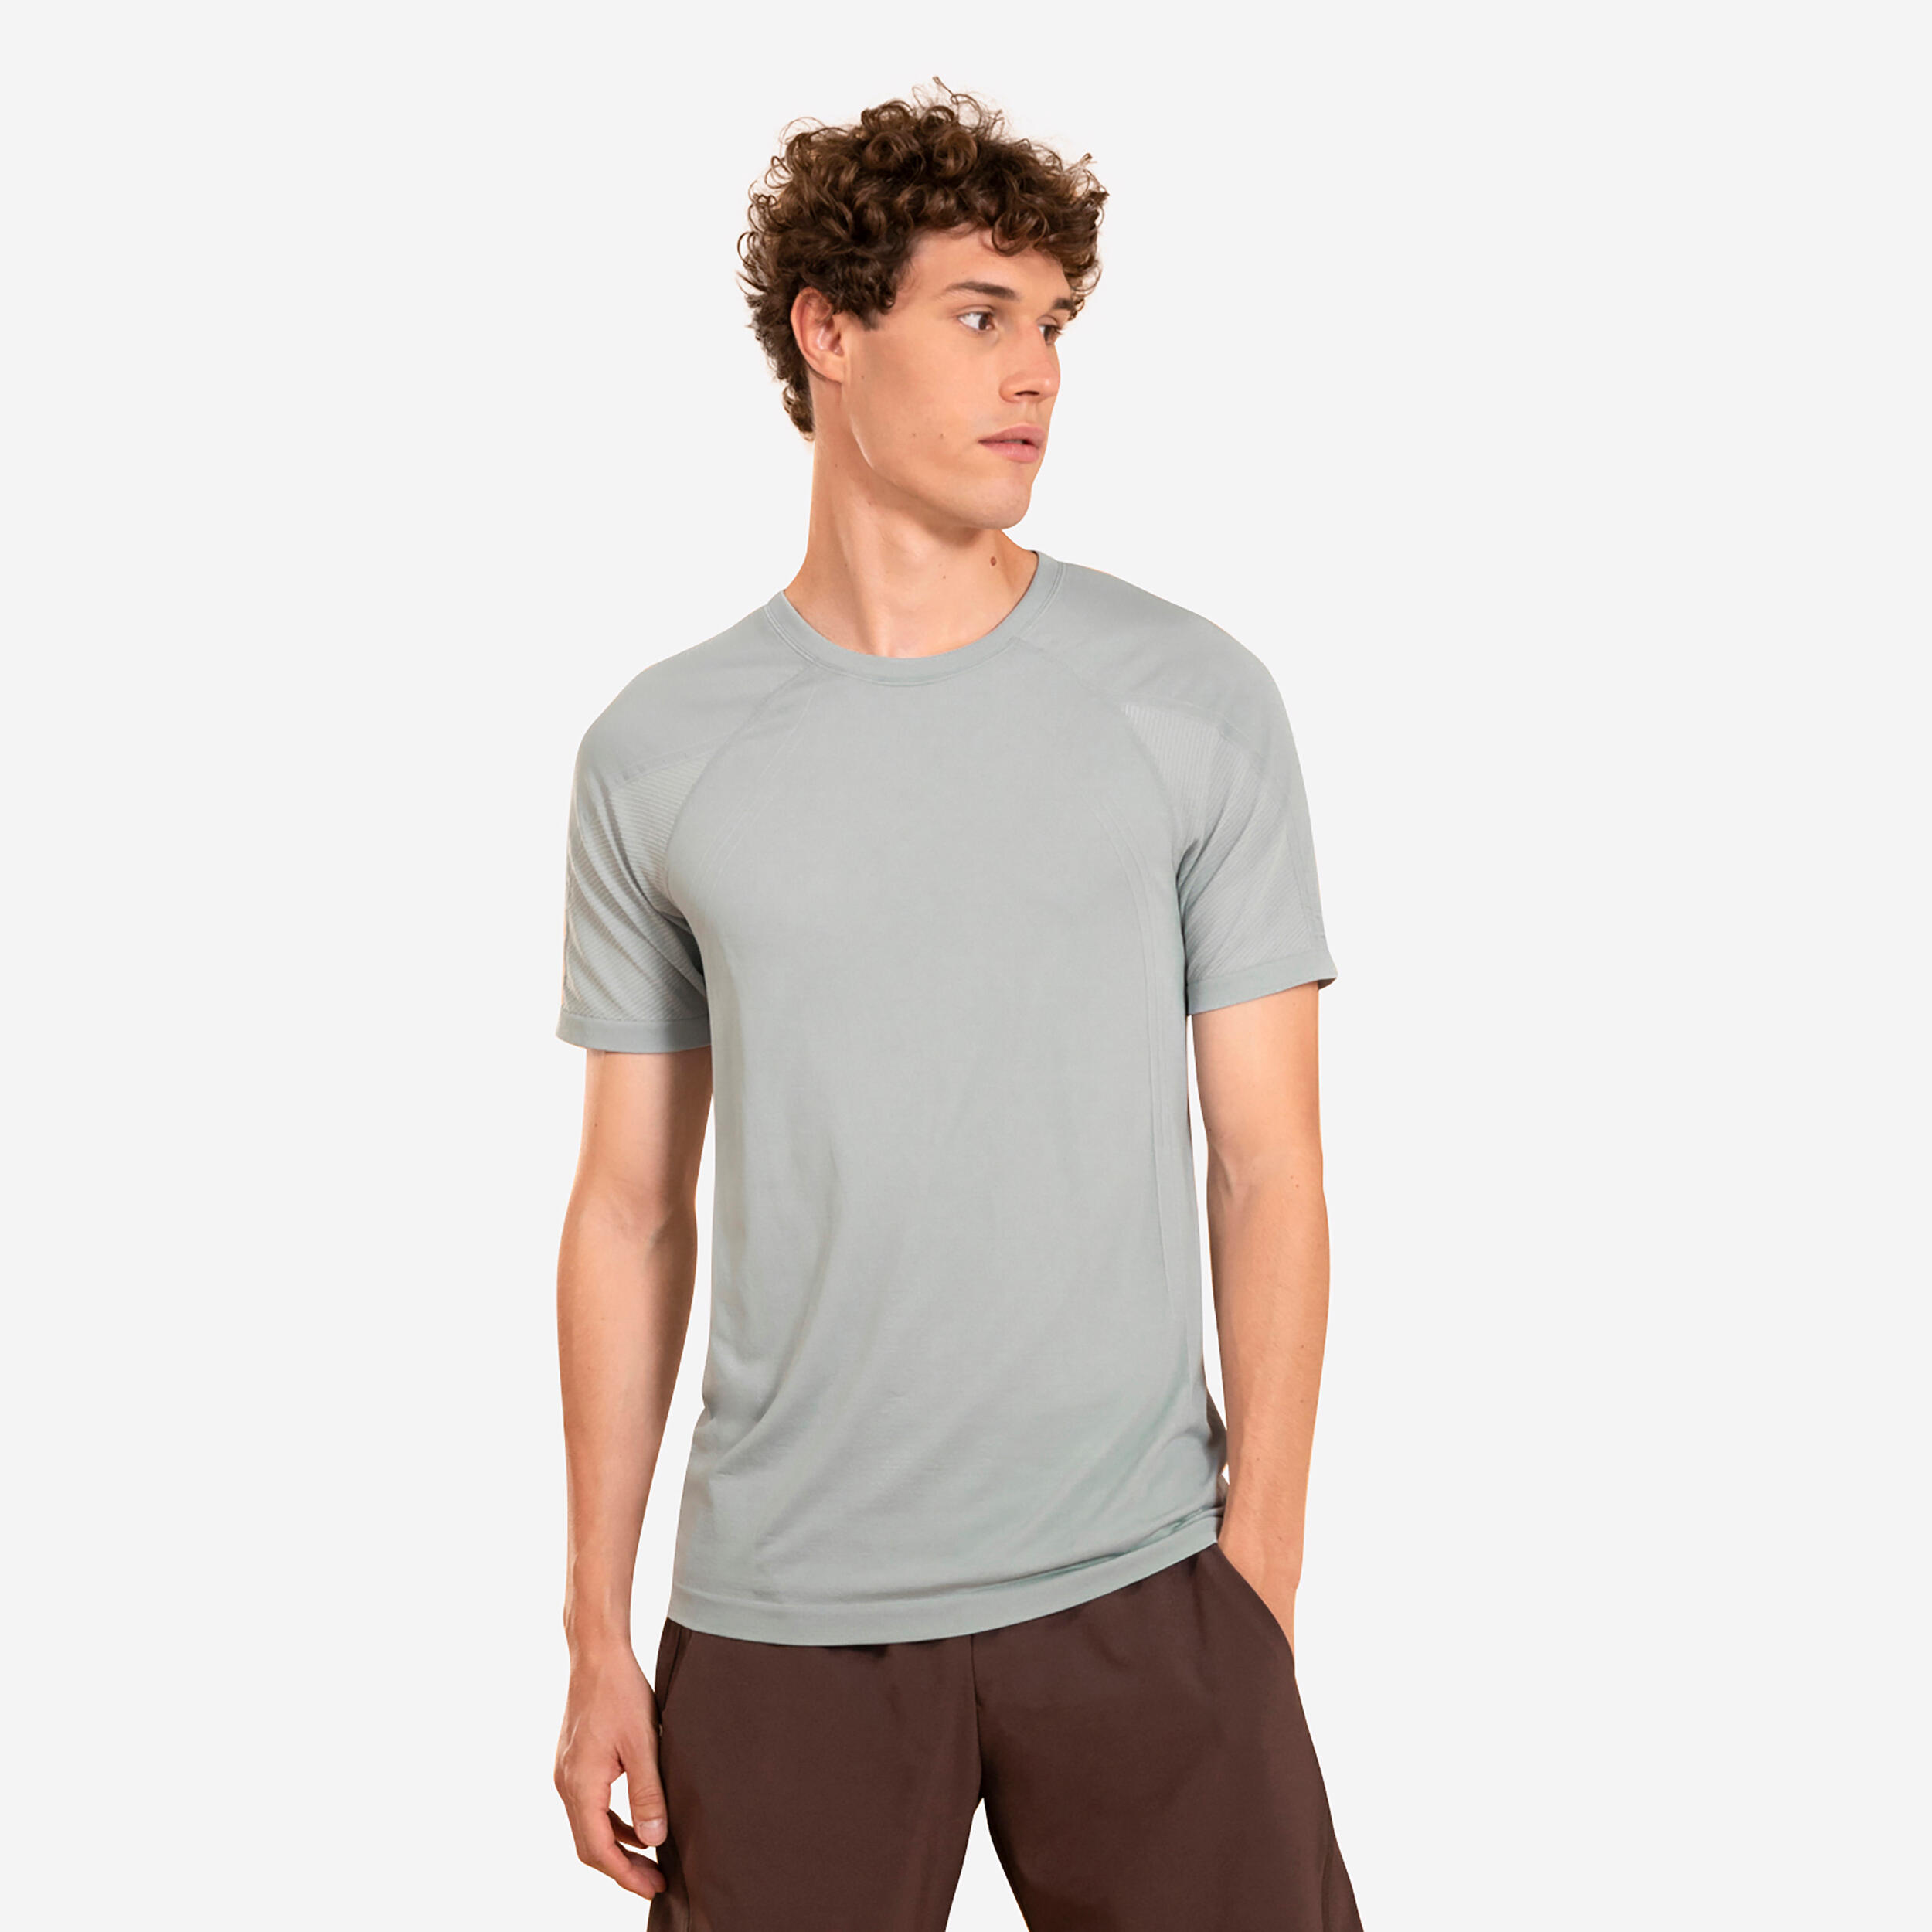 KIMJALY Men's Seamless Yoga T-Shirt Second Skin - Light Grey